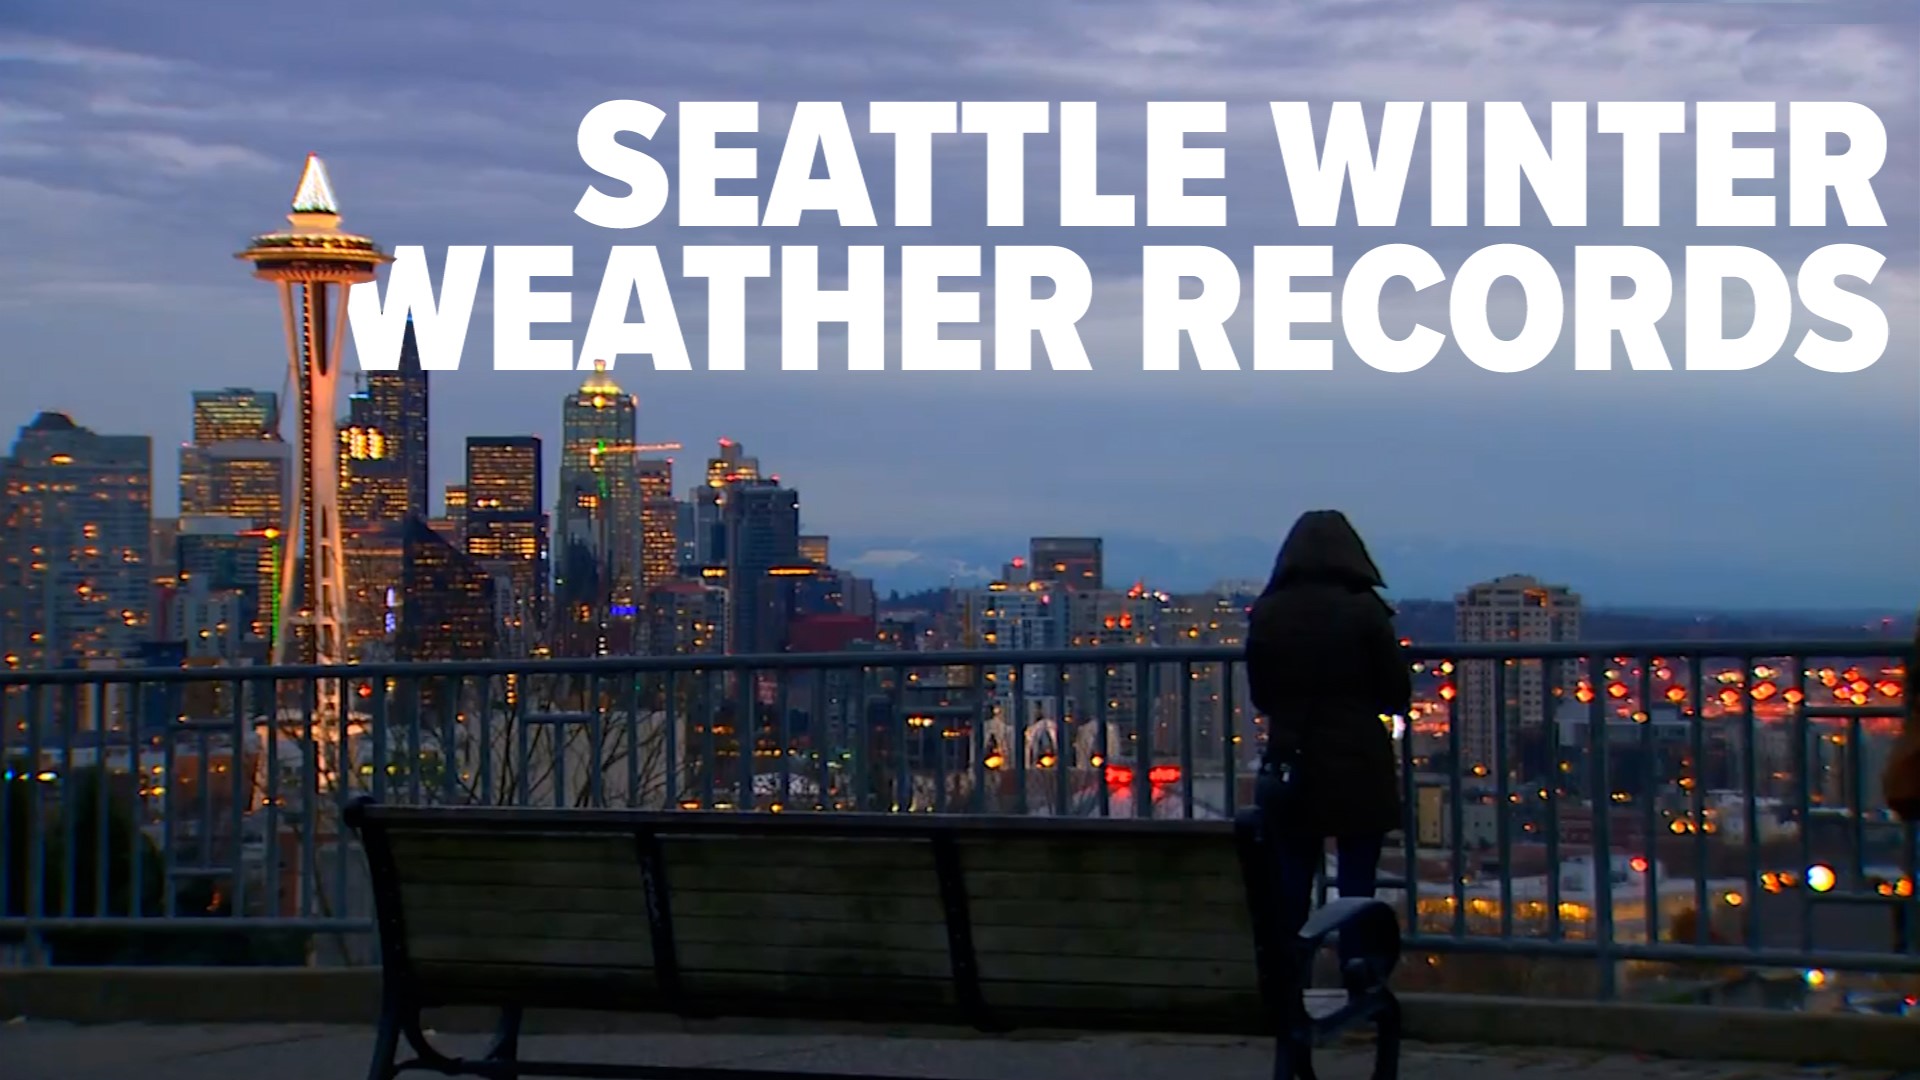 Western Washington sees warmest December on record, Seattle news